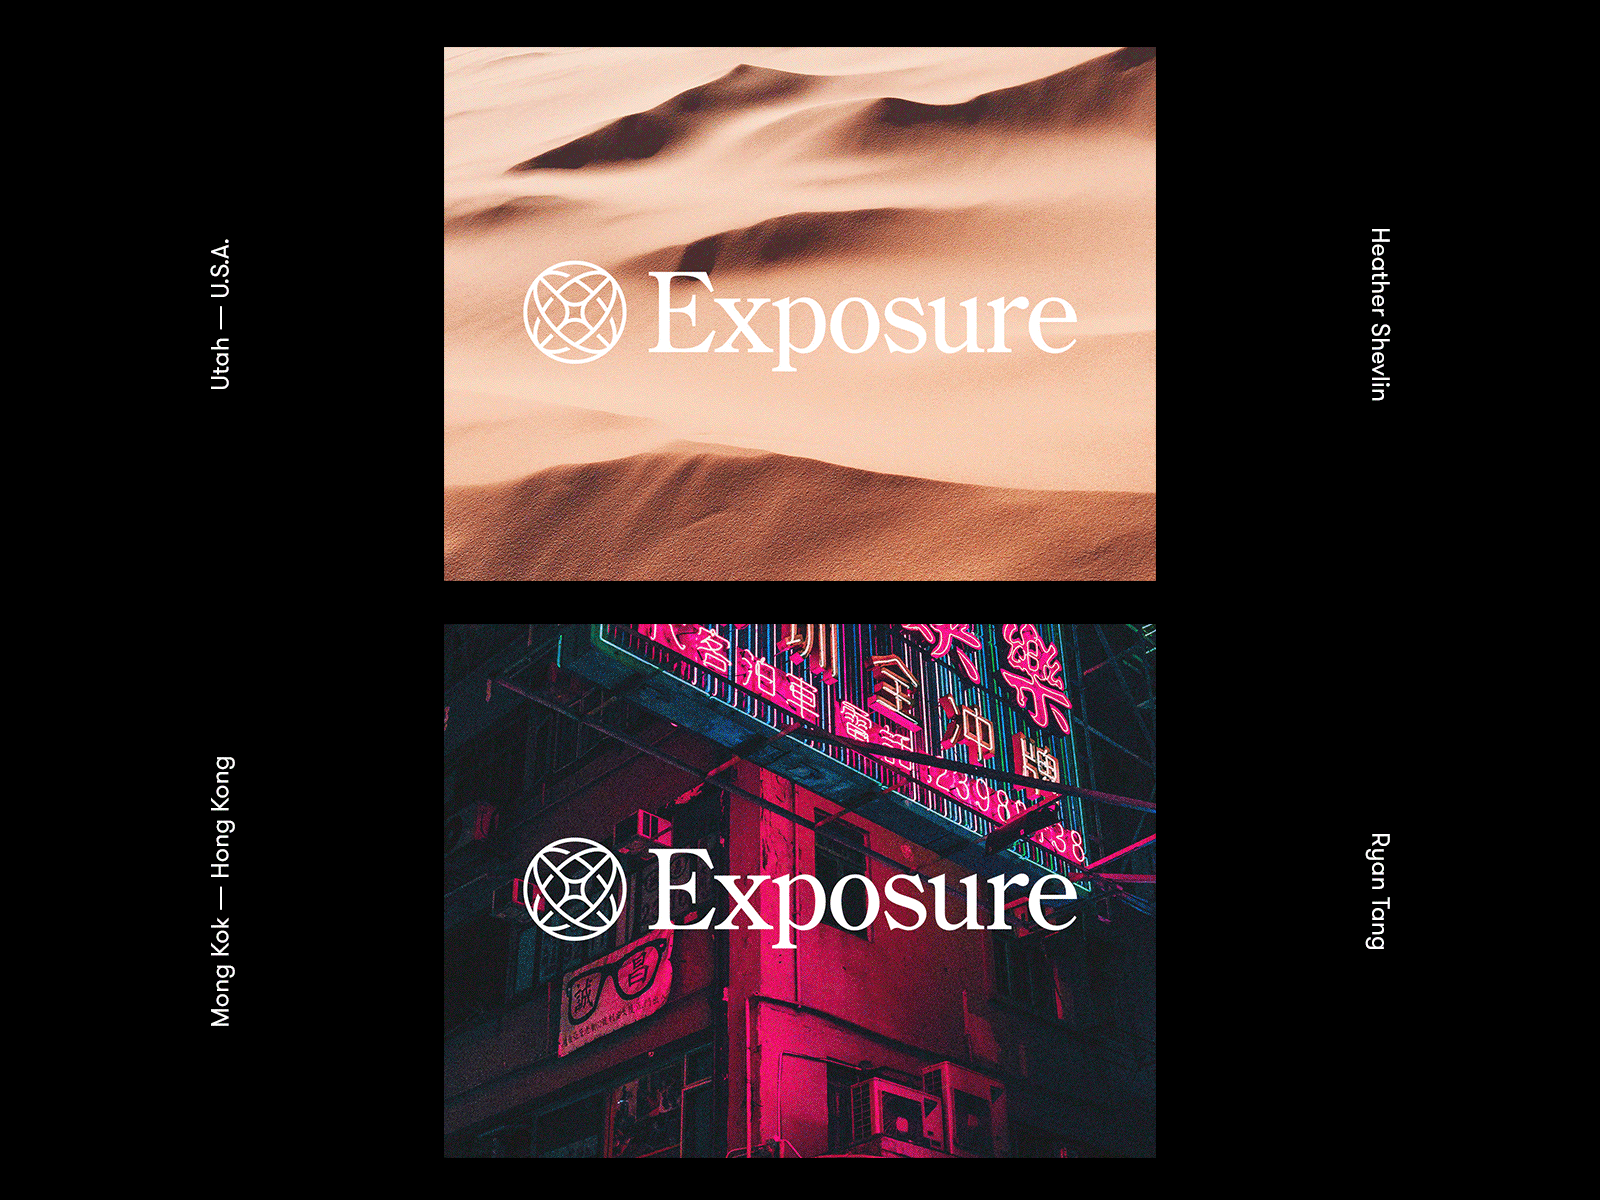 Working for Exposure branding typography atlanta photography cms travel modernism philadelphia symbol logo identity x globe exposure